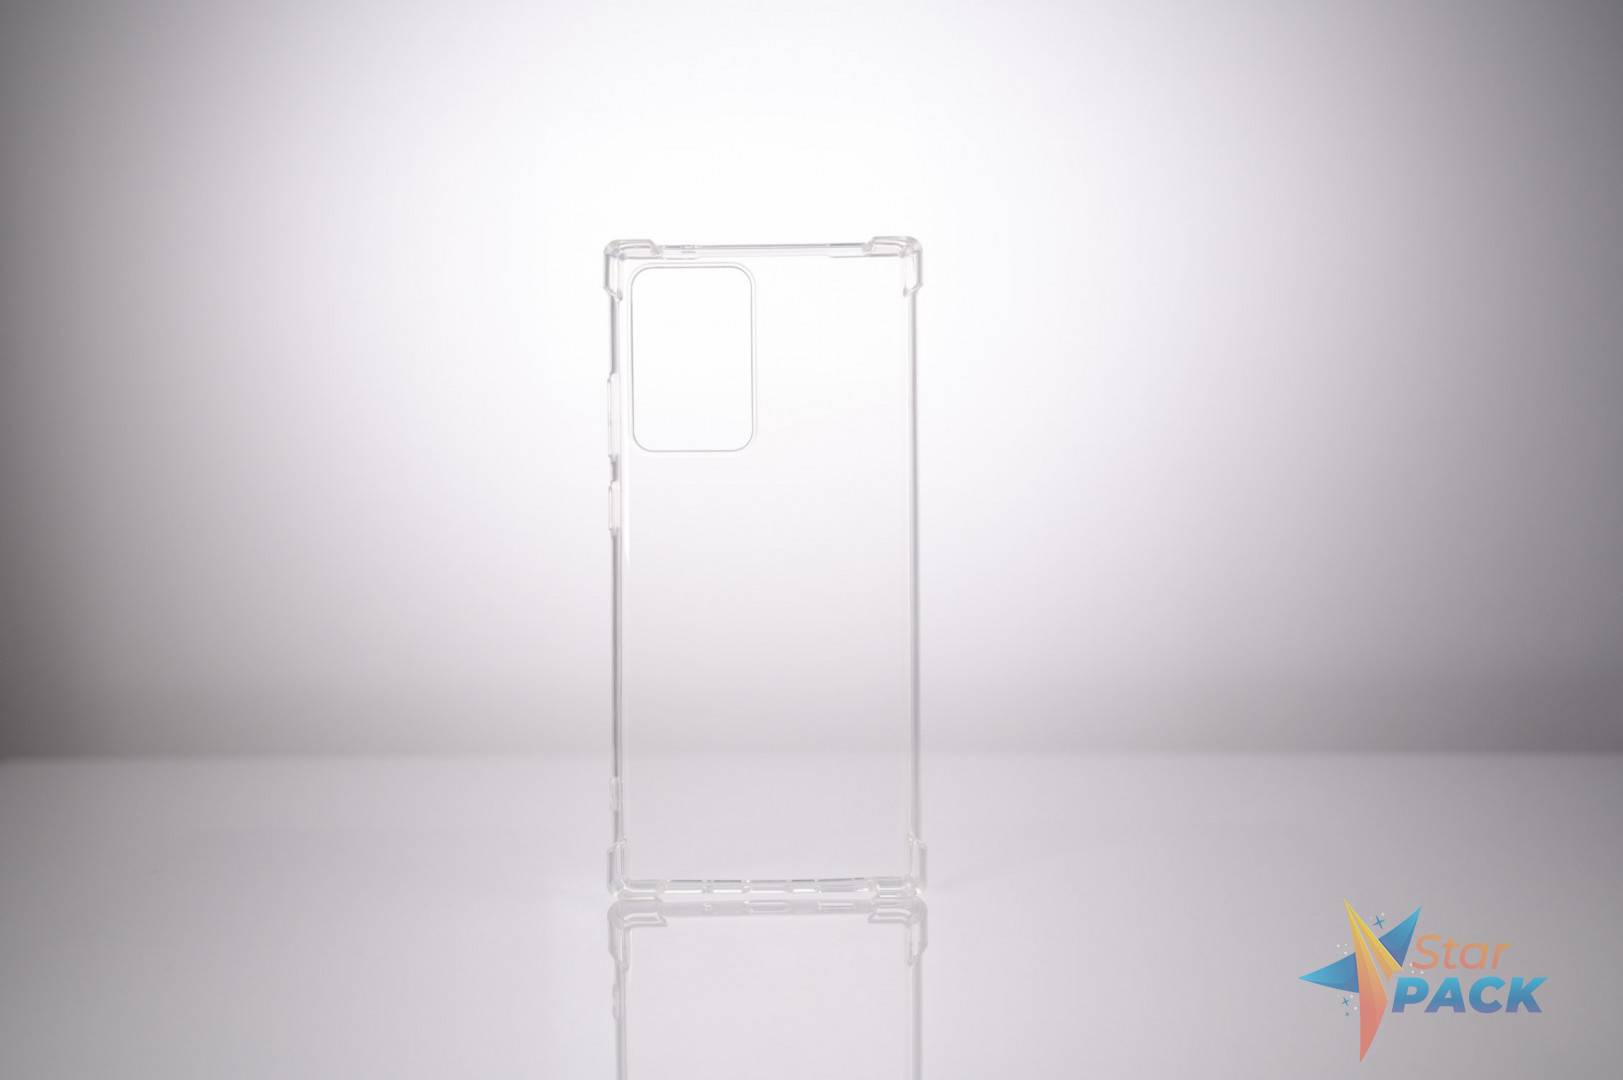 Husa Samsung Galaxy Note 20 Ultra Spacer, transparenta, grosime 1.5mm, protectie suplimentara antisoc la colturi, material flexibil TPU